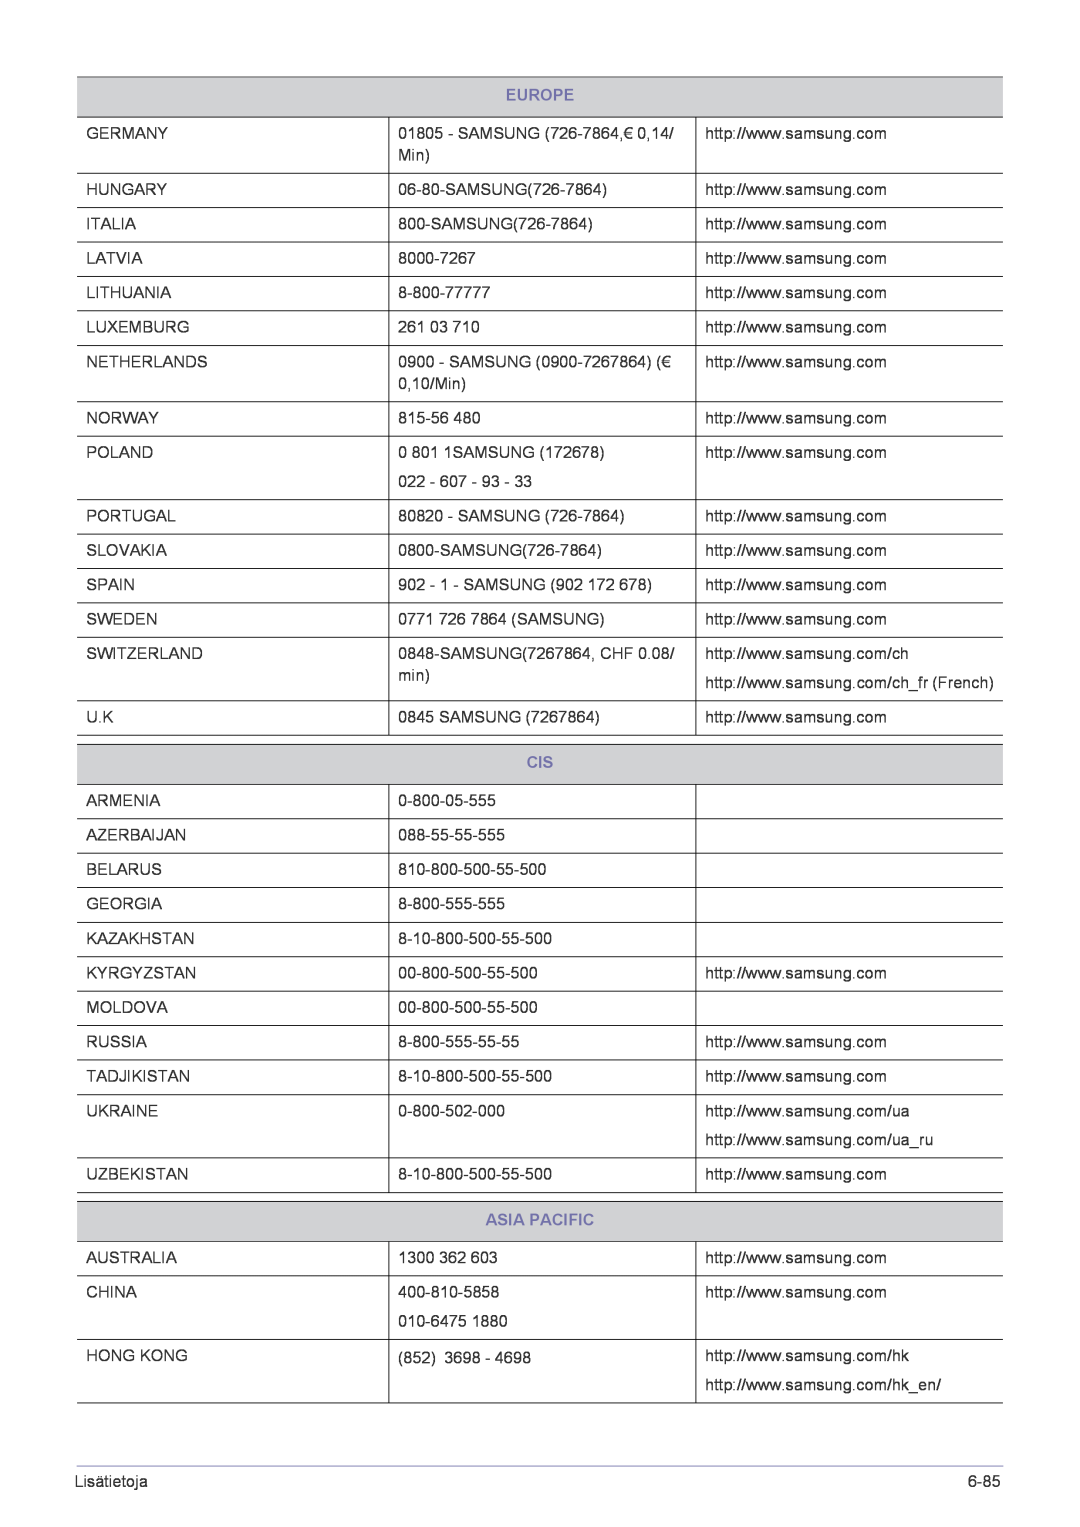 Samsung LS22CBDMSV/EN, LS19CLASSUEN, LS22CBUMBV/EN, LS19CLNSB/EN, LS22CBUMBE/EN, LS19CLASBUEN manual Europe, Asia Pacific 